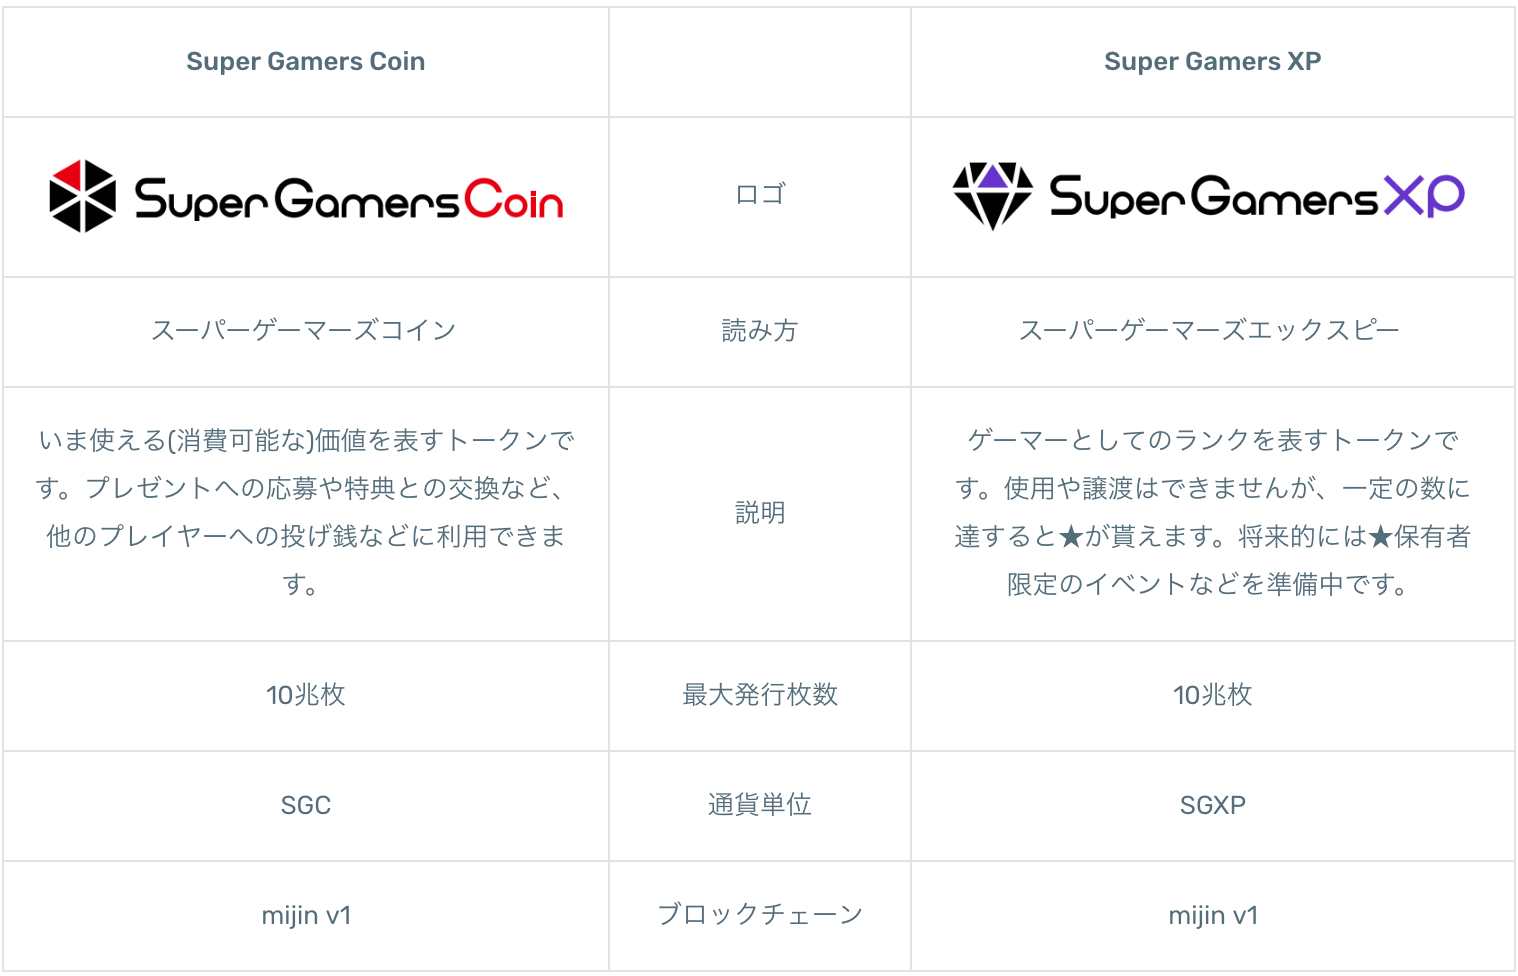 「GameDays」に使われている2種類のトークン「Super Gamers Coin（いま使える[消費可能な]価値を表すトークン）」「Super Gamers XP（ゲーマーとしてのランクを表すトークンです。使用や譲渡はできません）」